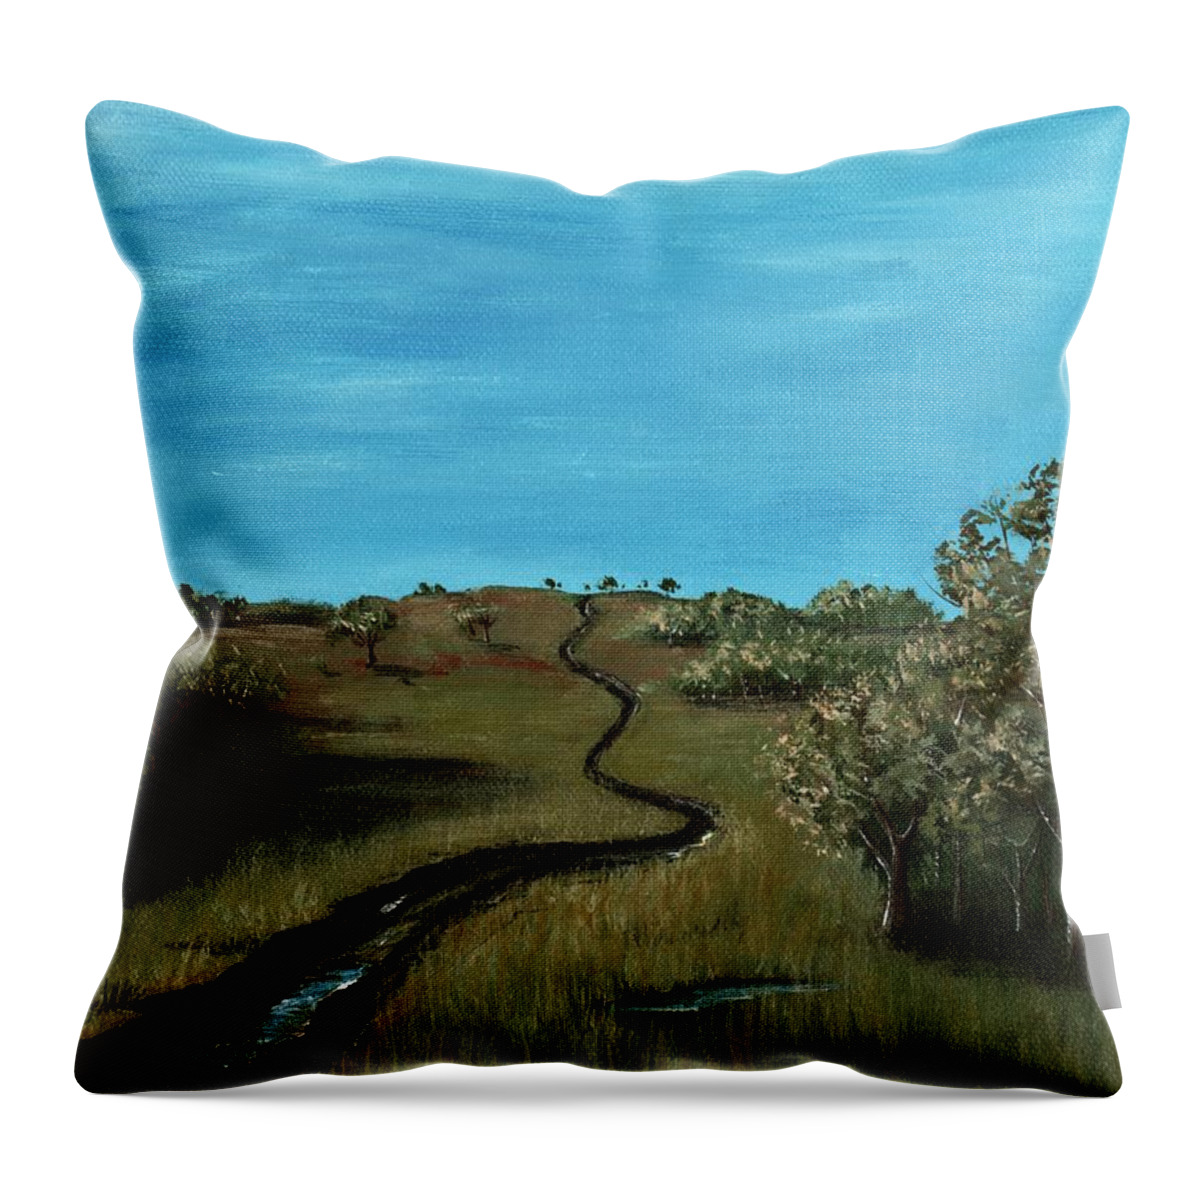 Malakhova Throw Pillow featuring the painting Long Trail by Anastasiya Malakhova